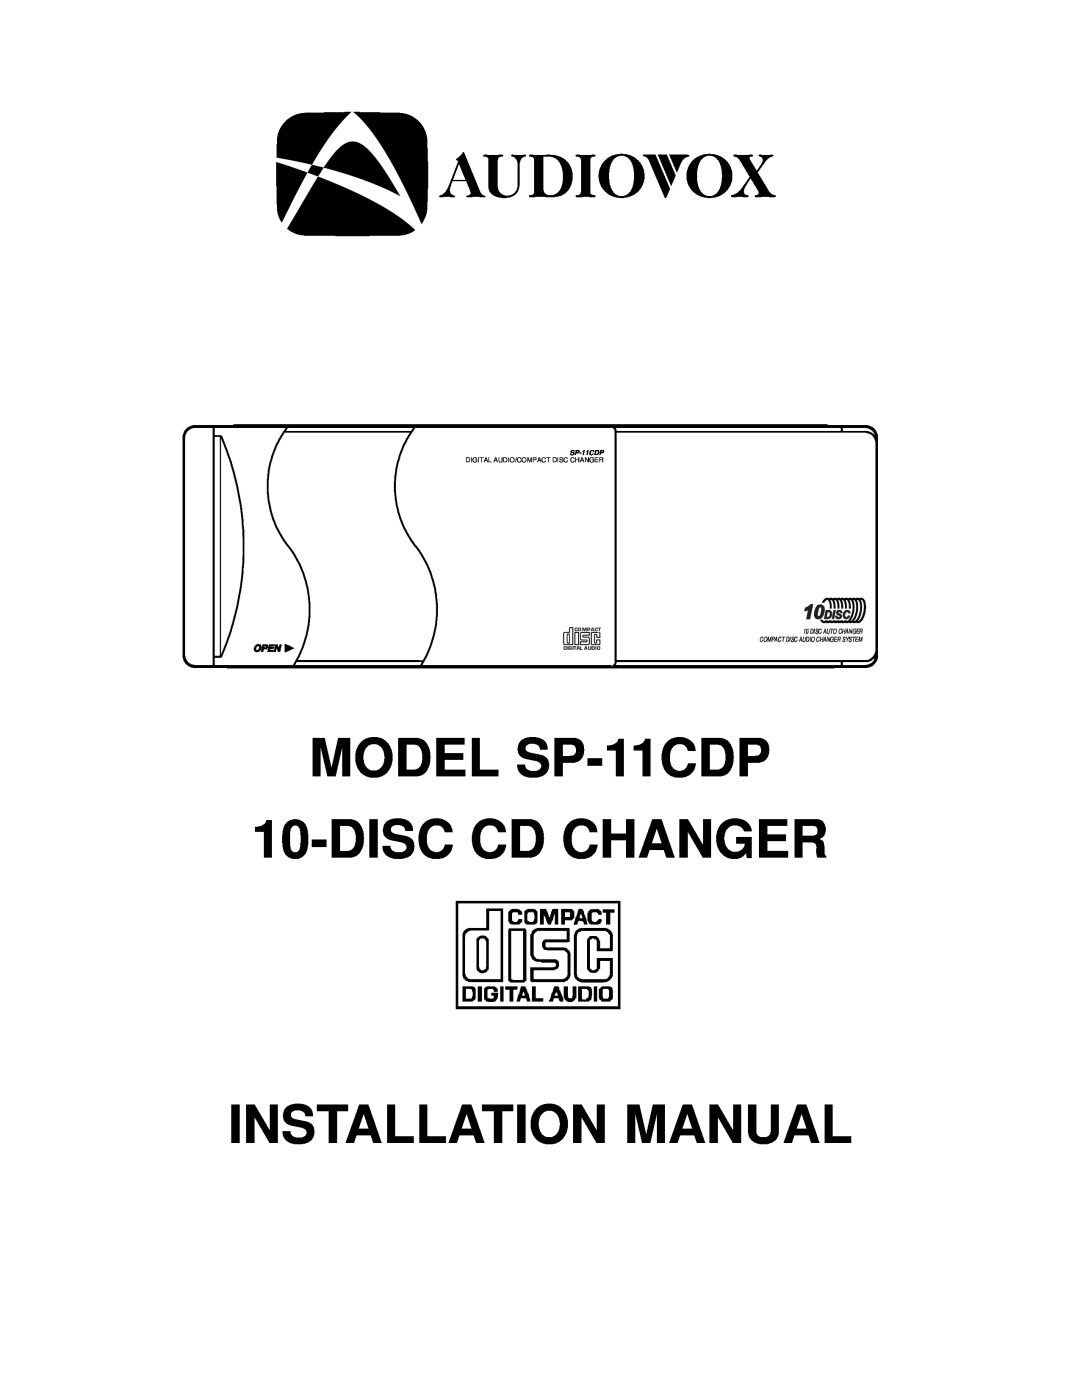 Audiovox installation manual MODEL SP-11CDP 10-DISCCD CHANGER, Installation Manual, Digital Audio/Compact Disc Changer 